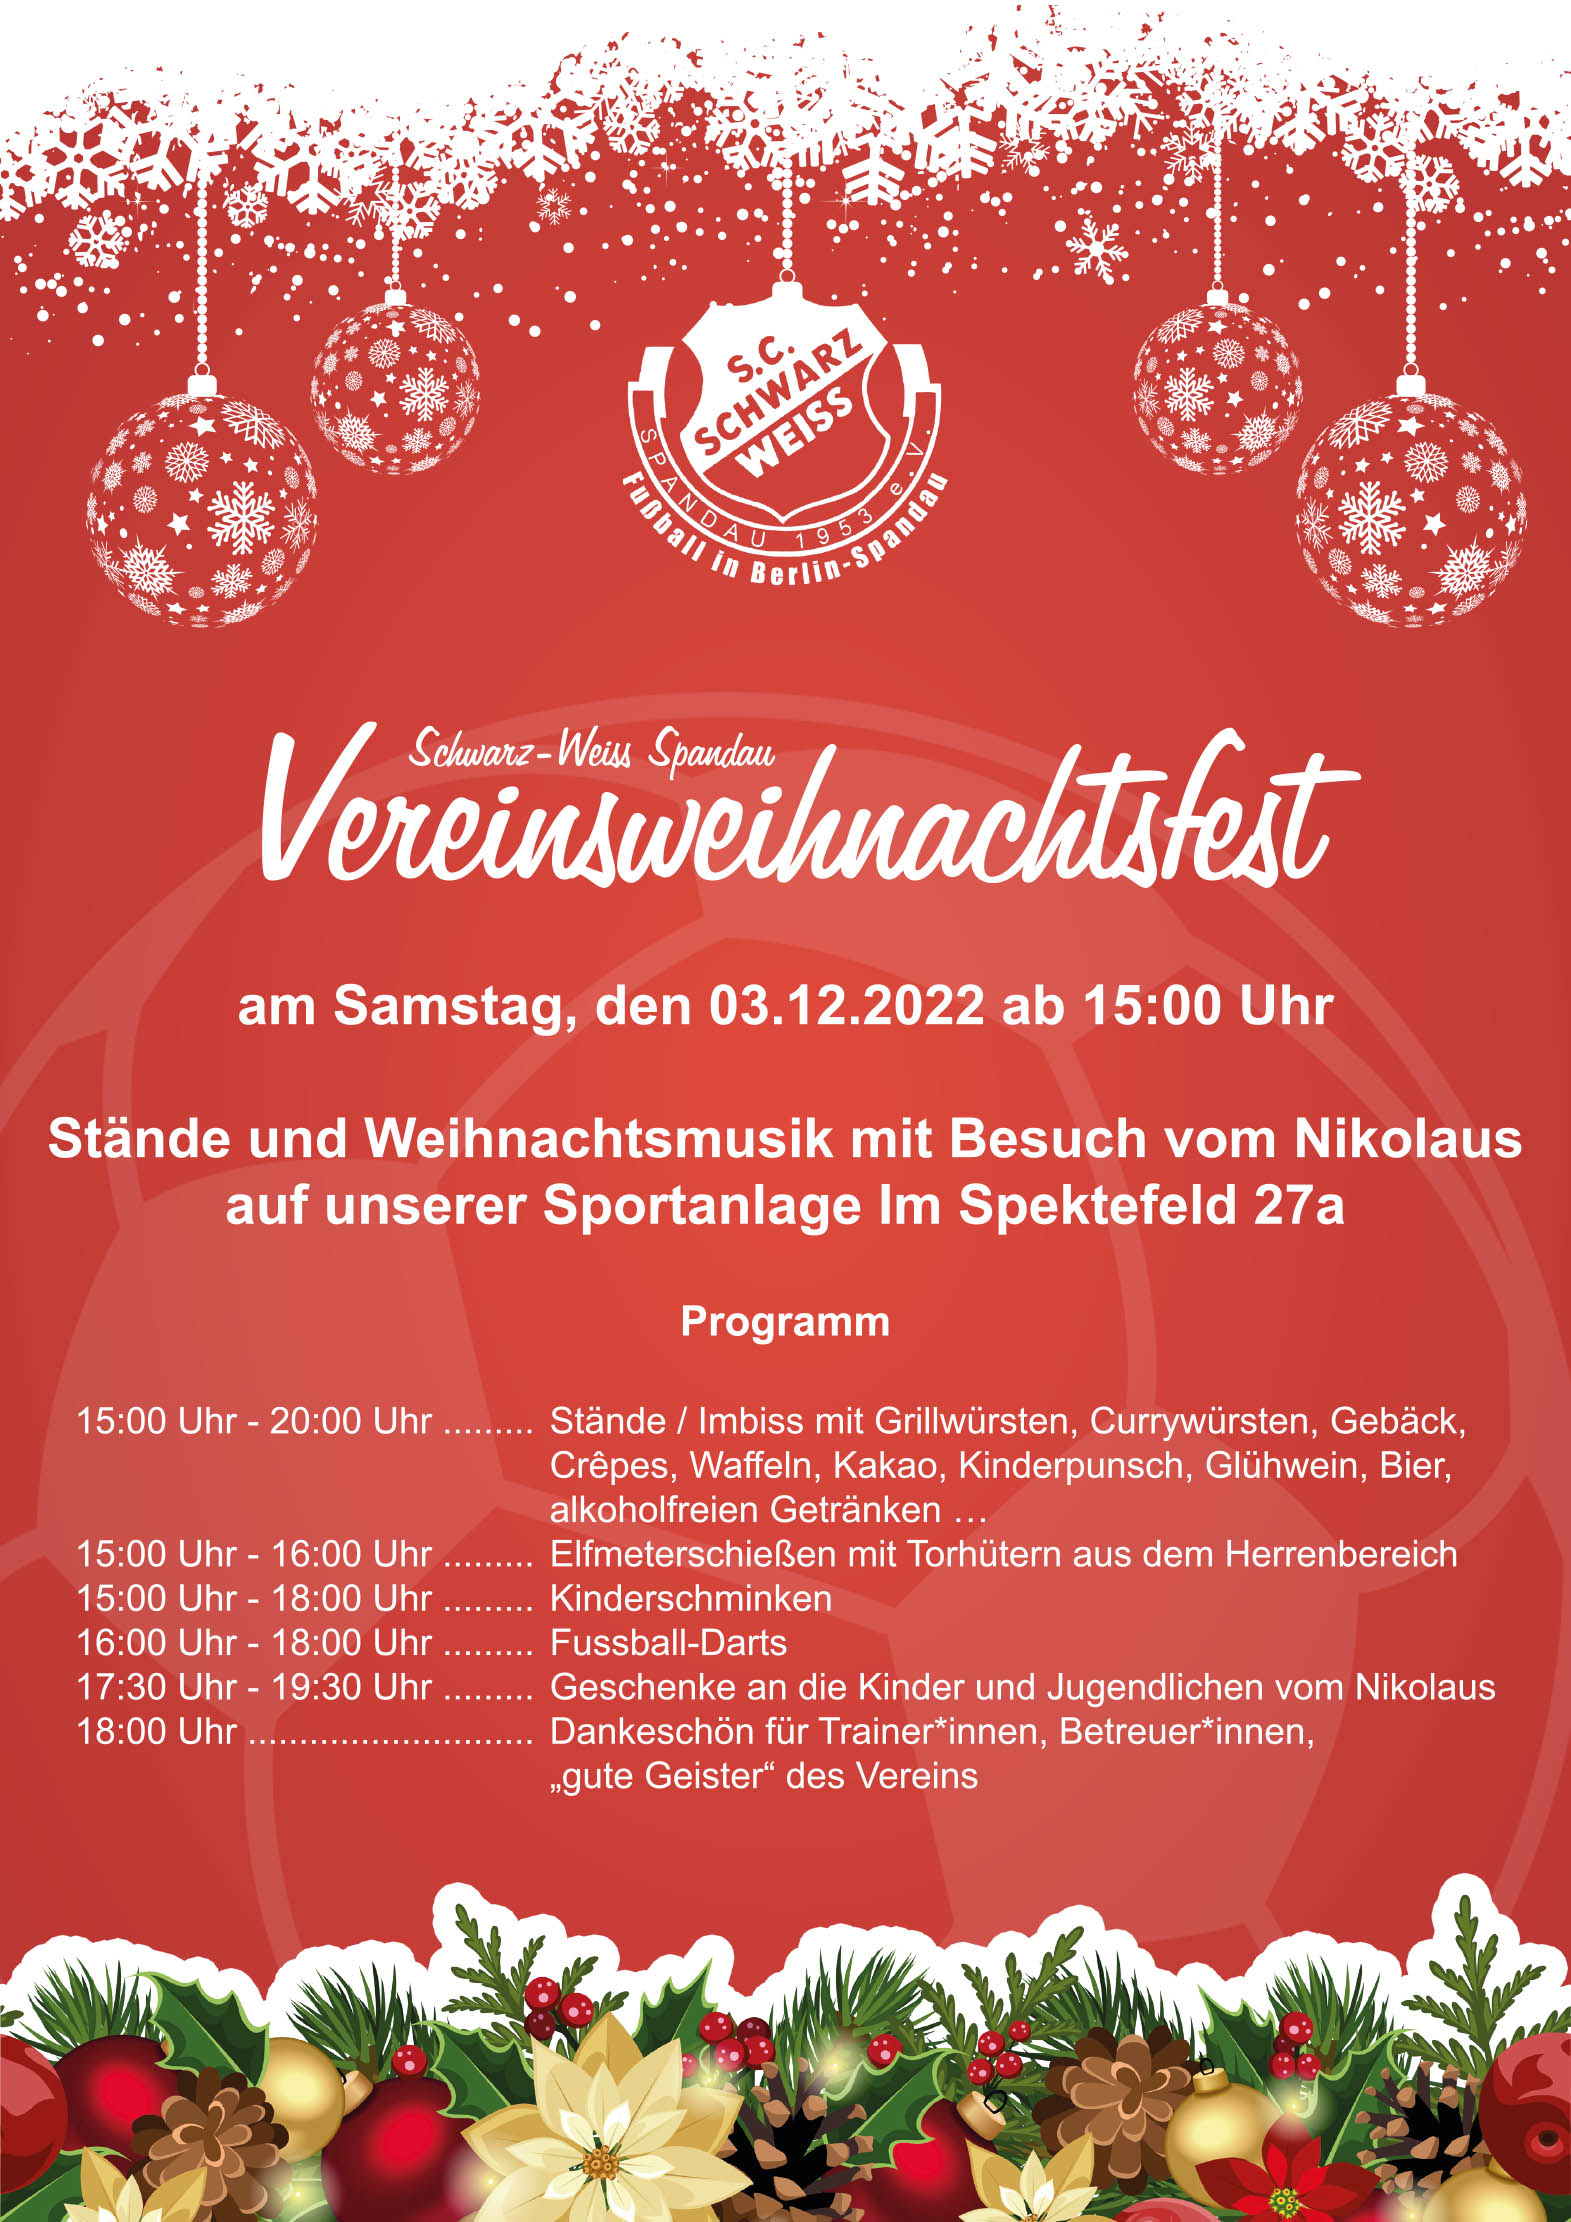 Vereinsweihnachtsfest am 03.12.2022! post thumbnail image